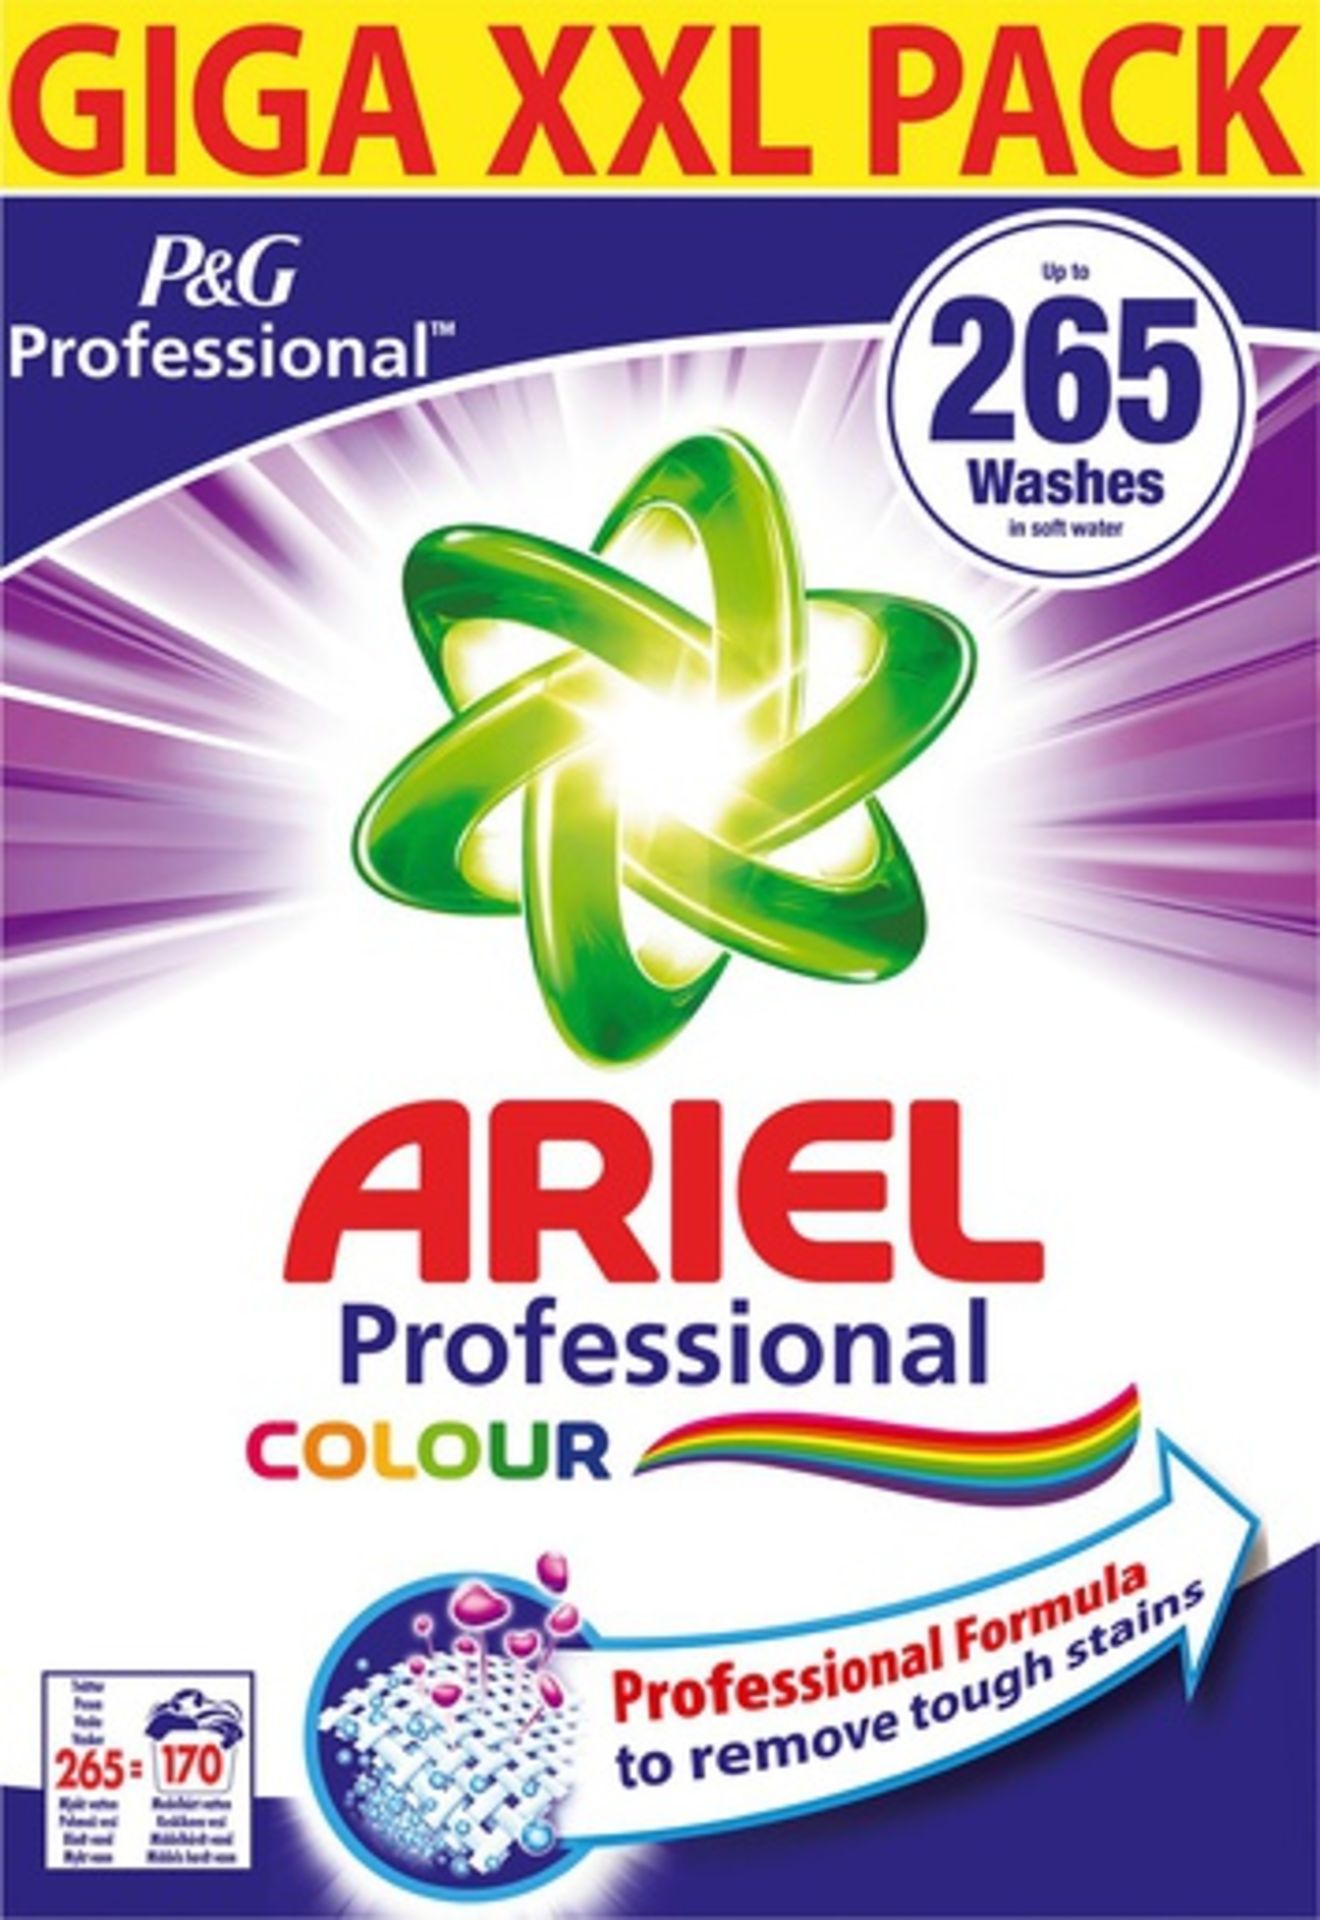 V *TRADE QTY* Brand New Ariel Professional 7.1Kg Colour Washing Powder X 50 YOUR BID PRICE TO BE